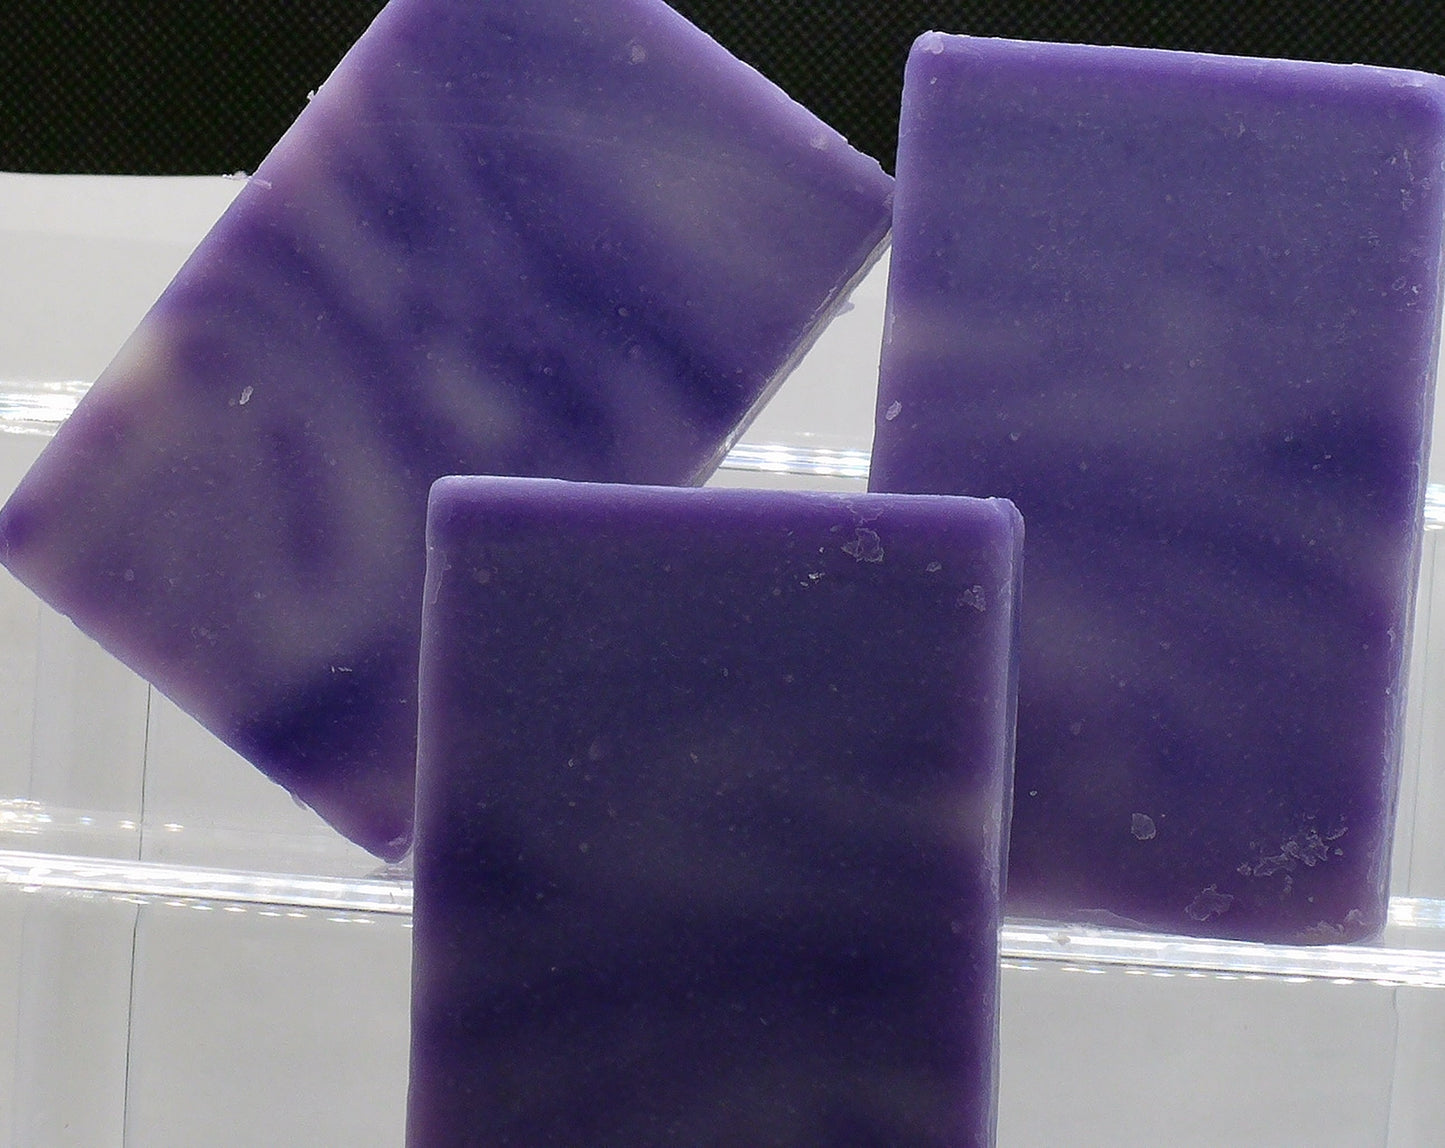 Standard English Lavender Soap Bar